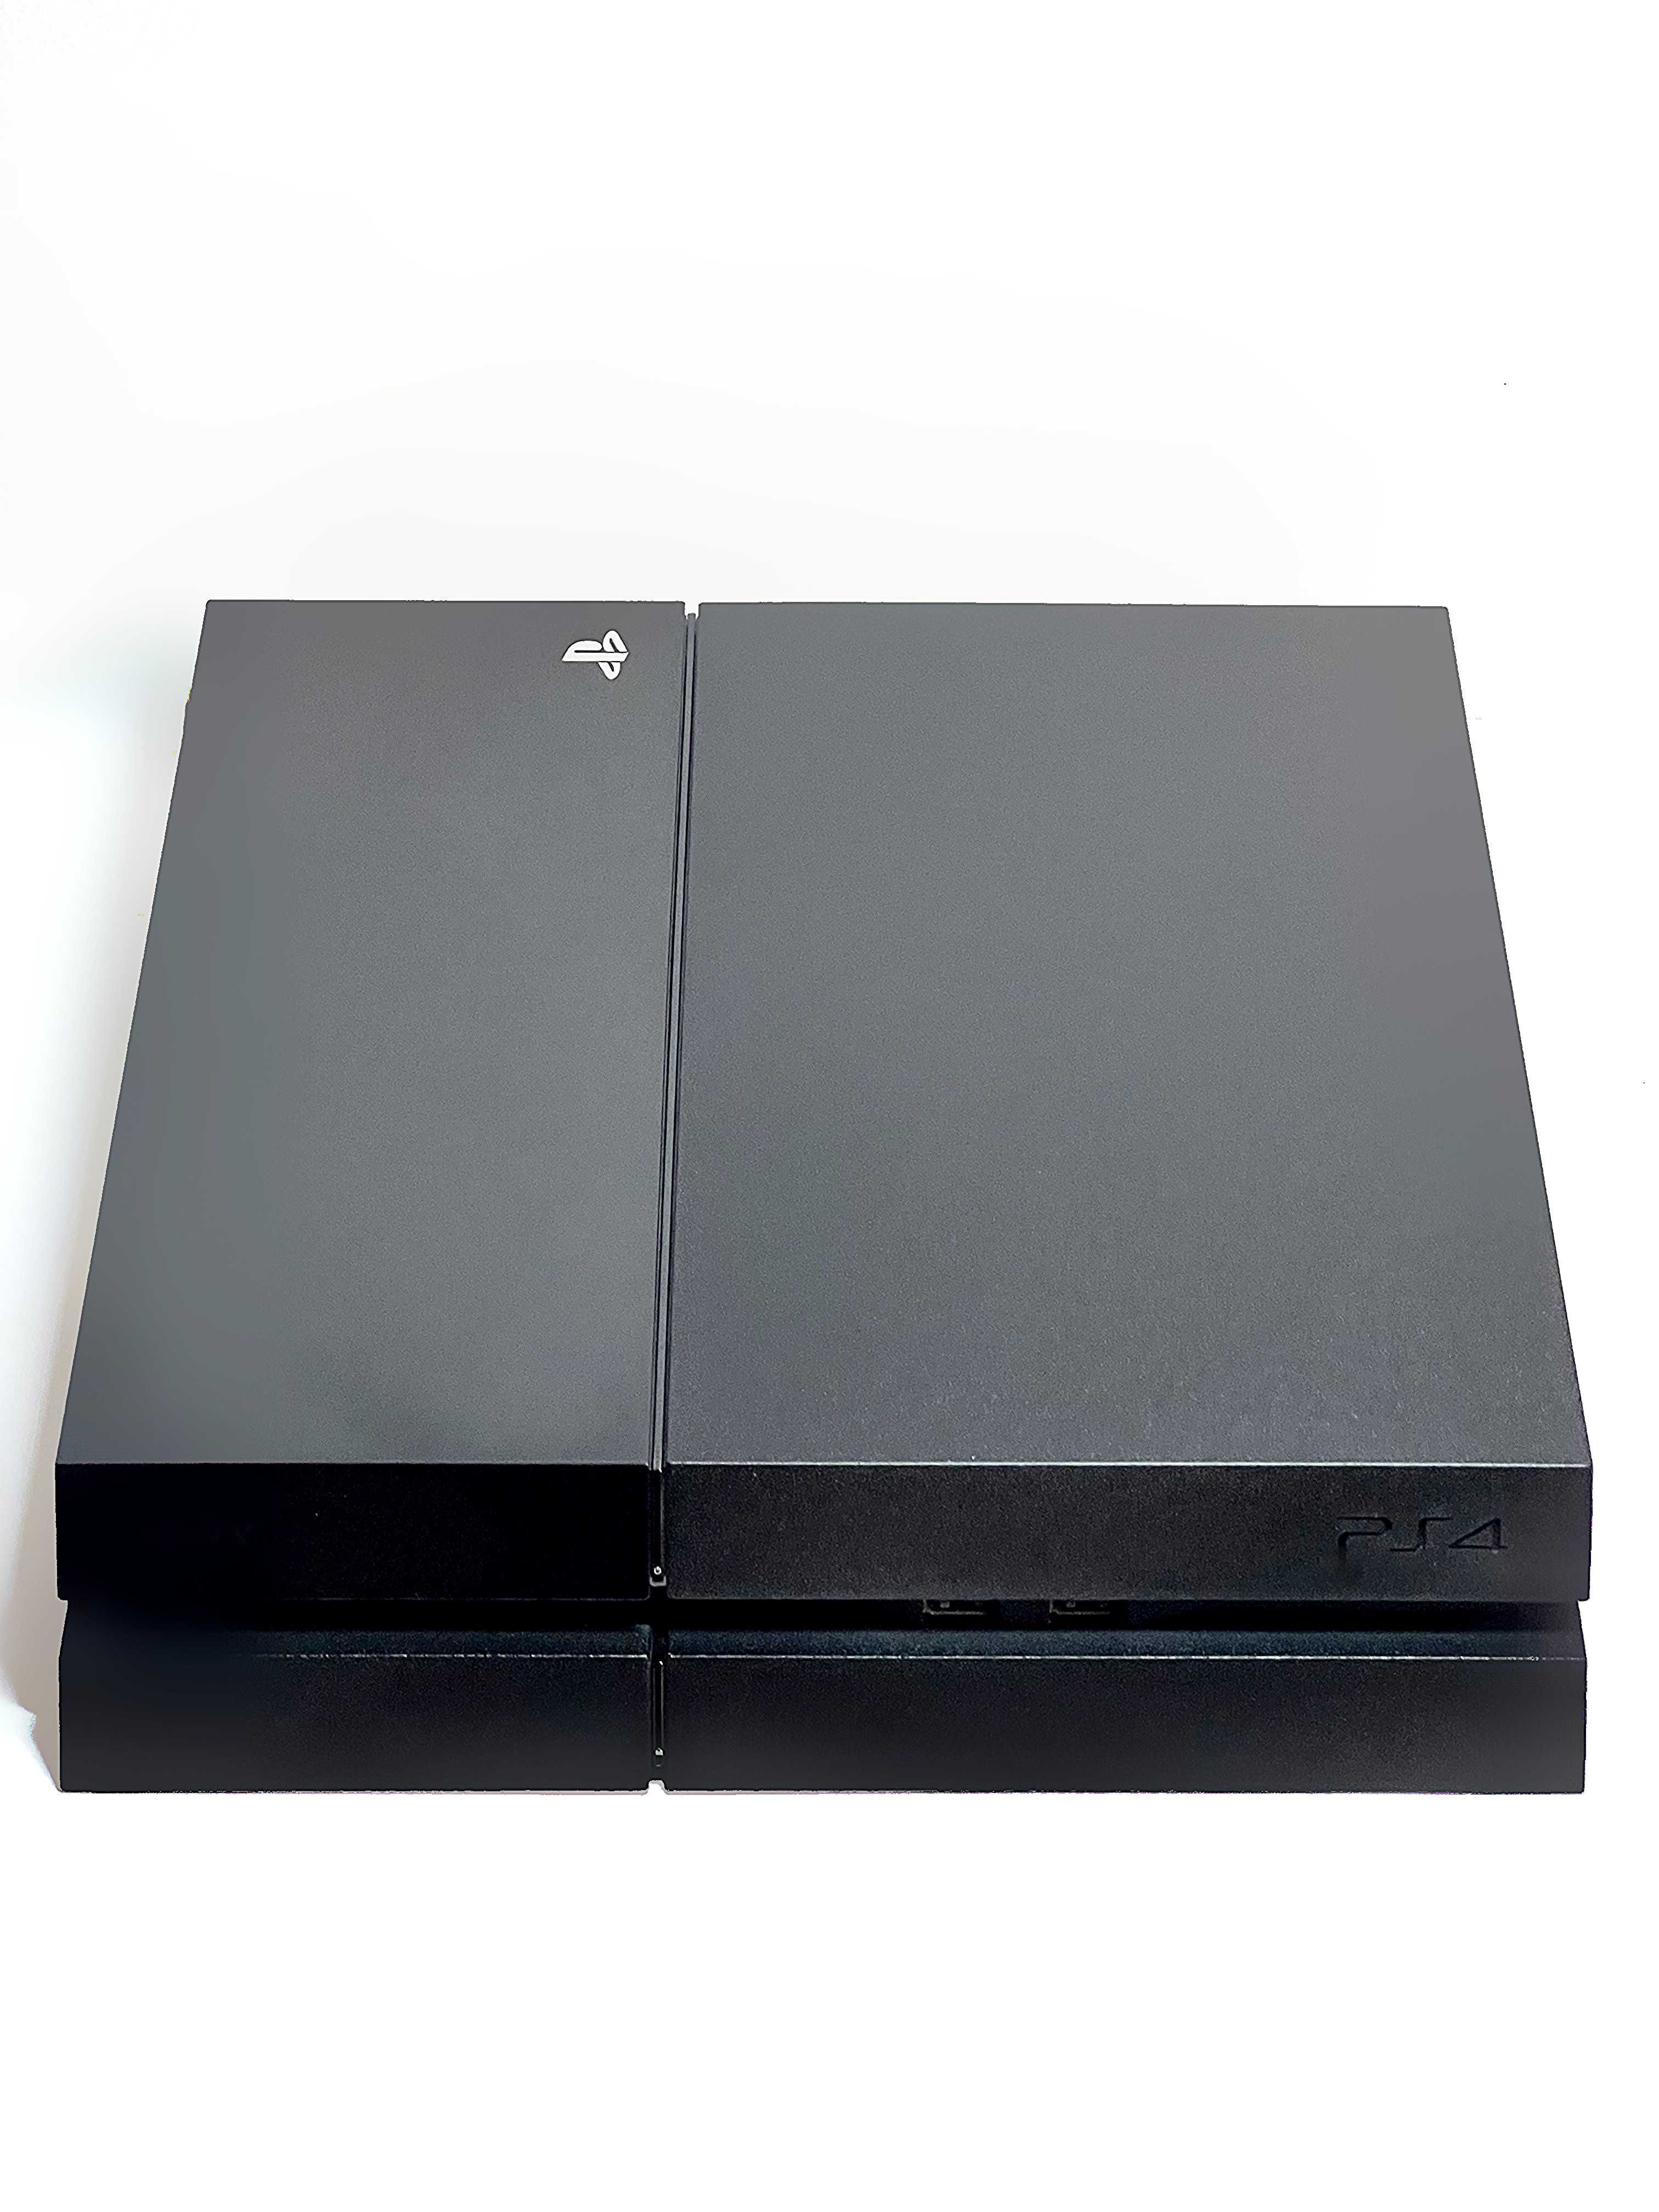 [PS4 9.00] Sony PlayStation 4 Black + Ігри | Гарантія